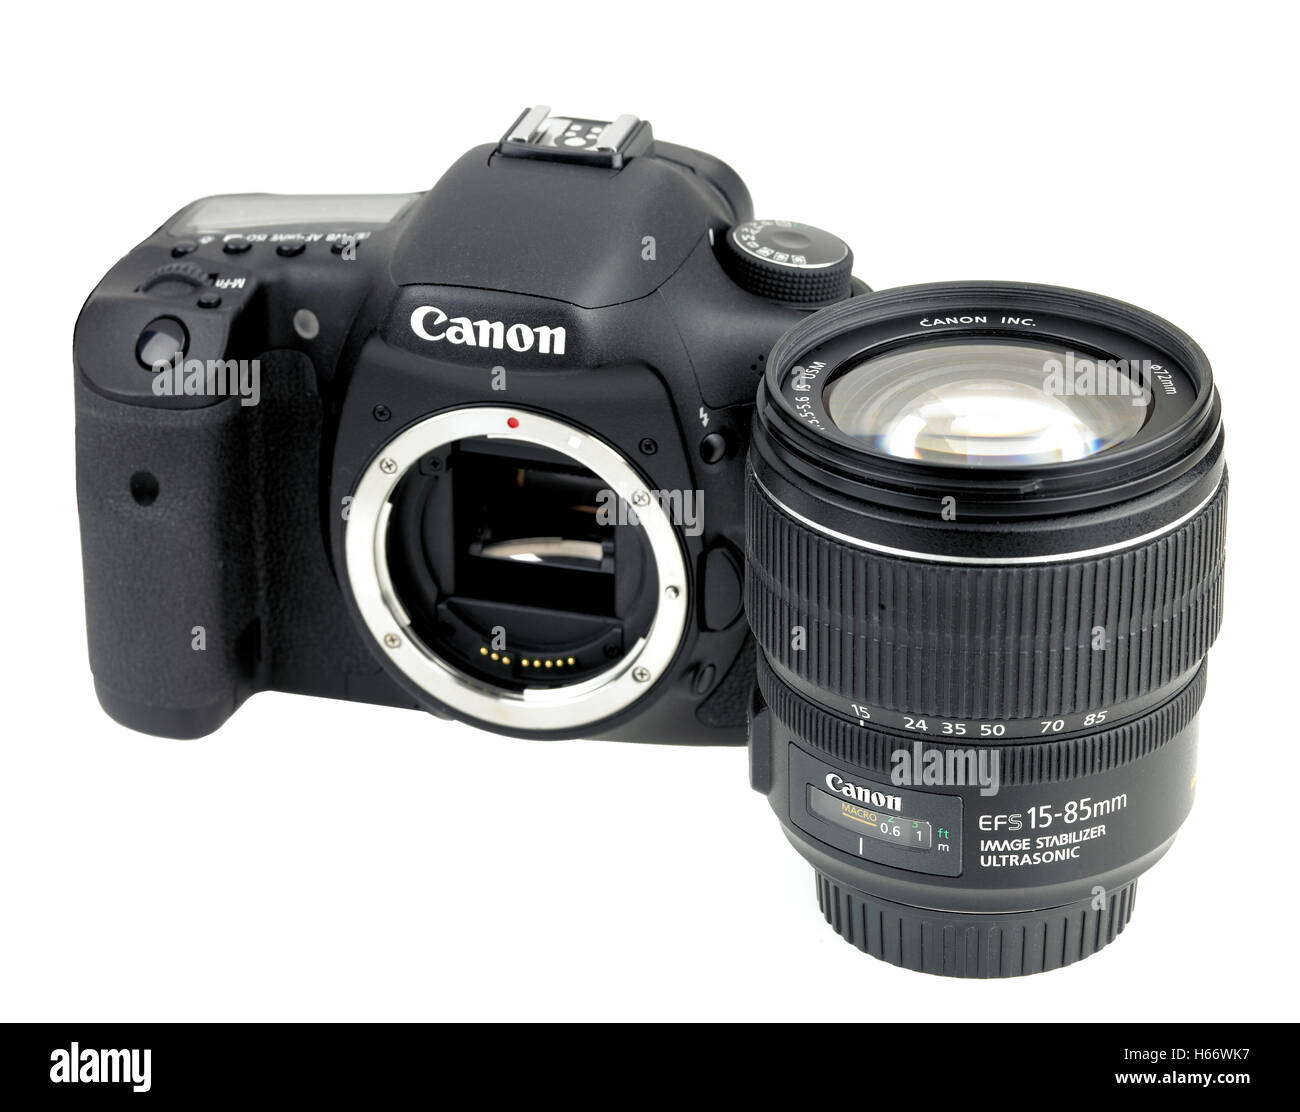 Canon Eos 7d digital SLR camera Stock Photo